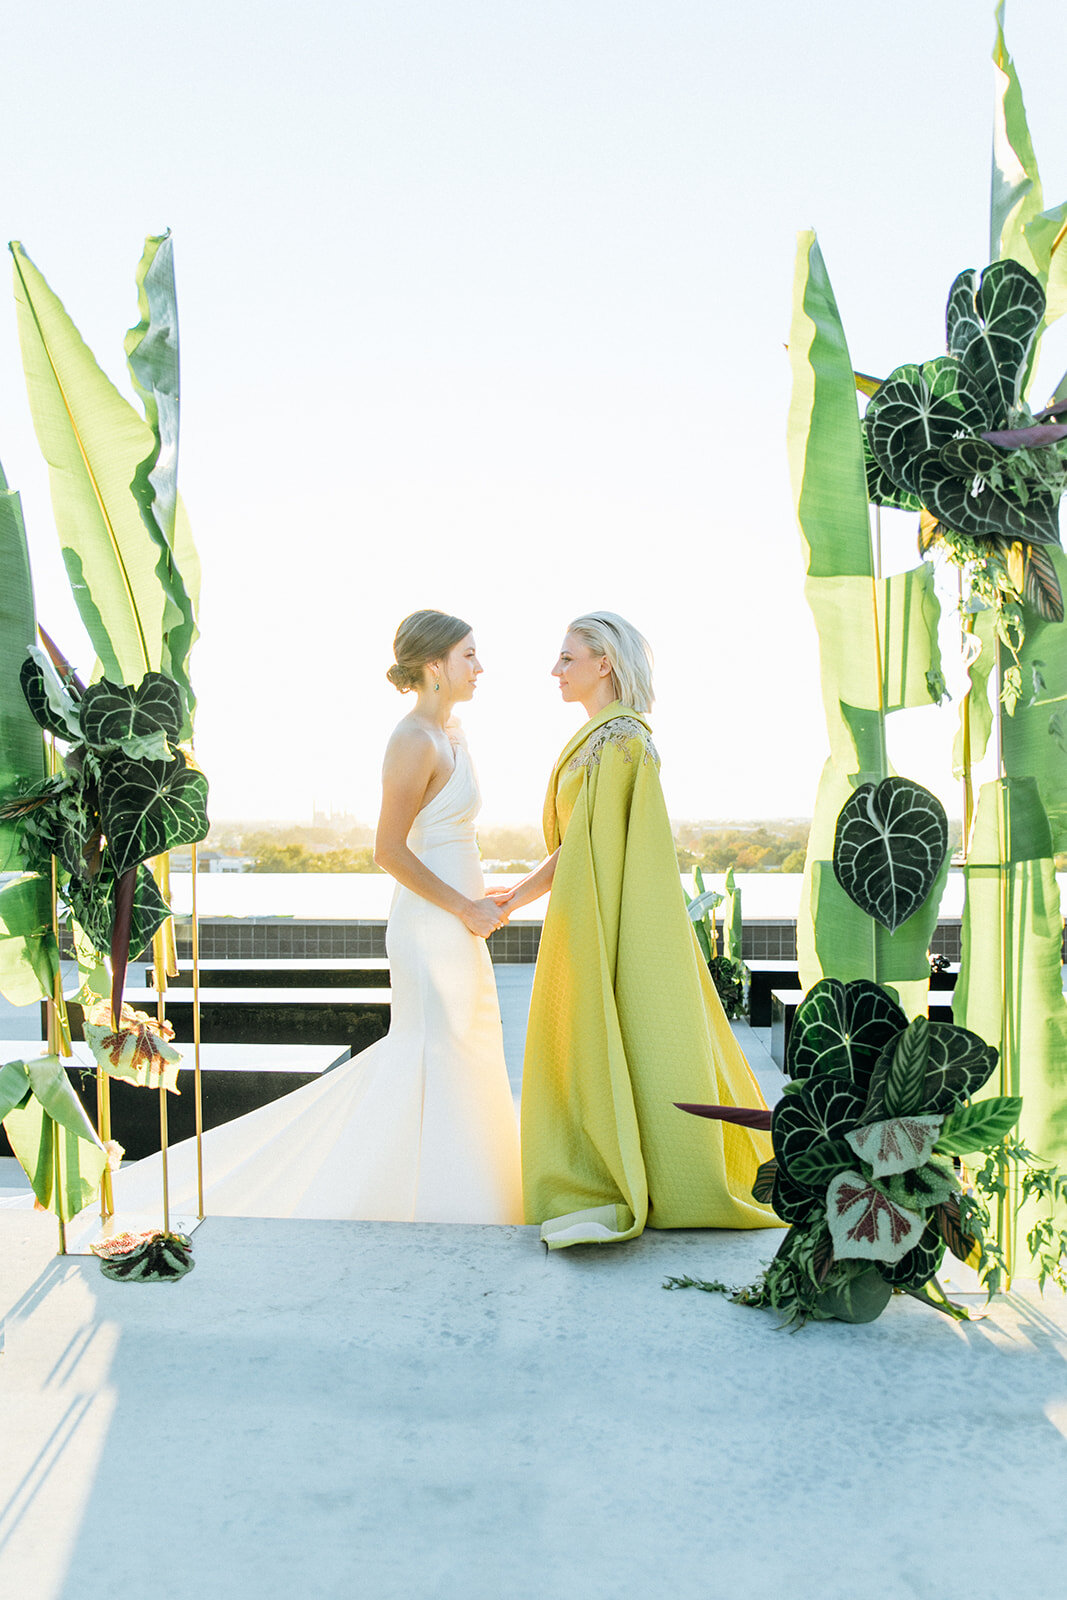 utah-bride-and-groom-wedding-magazine-lesbian-editorial-salt-lake-city-wedding-michael-cozzens-photo-video-646.jpg